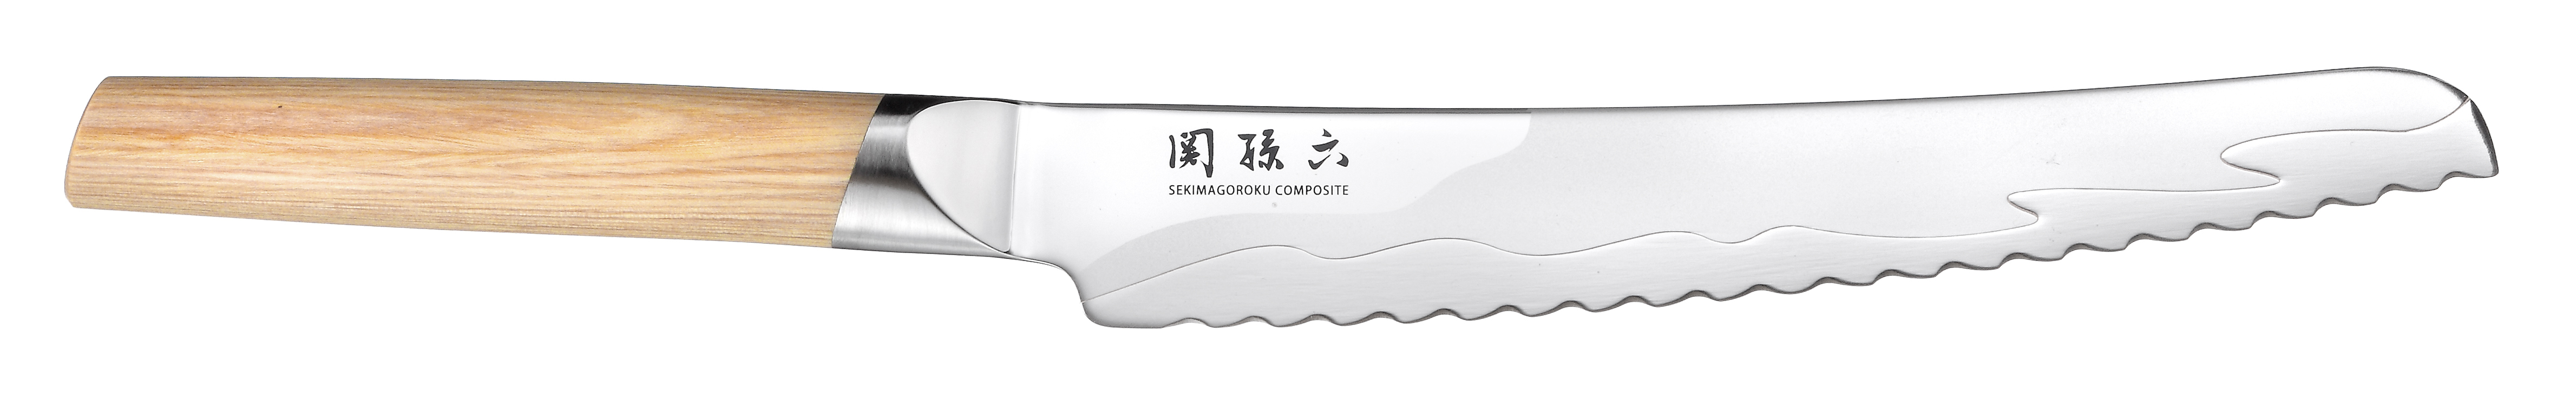 KAI SEKI MAGOROKU COMPOSITE MGC-0405